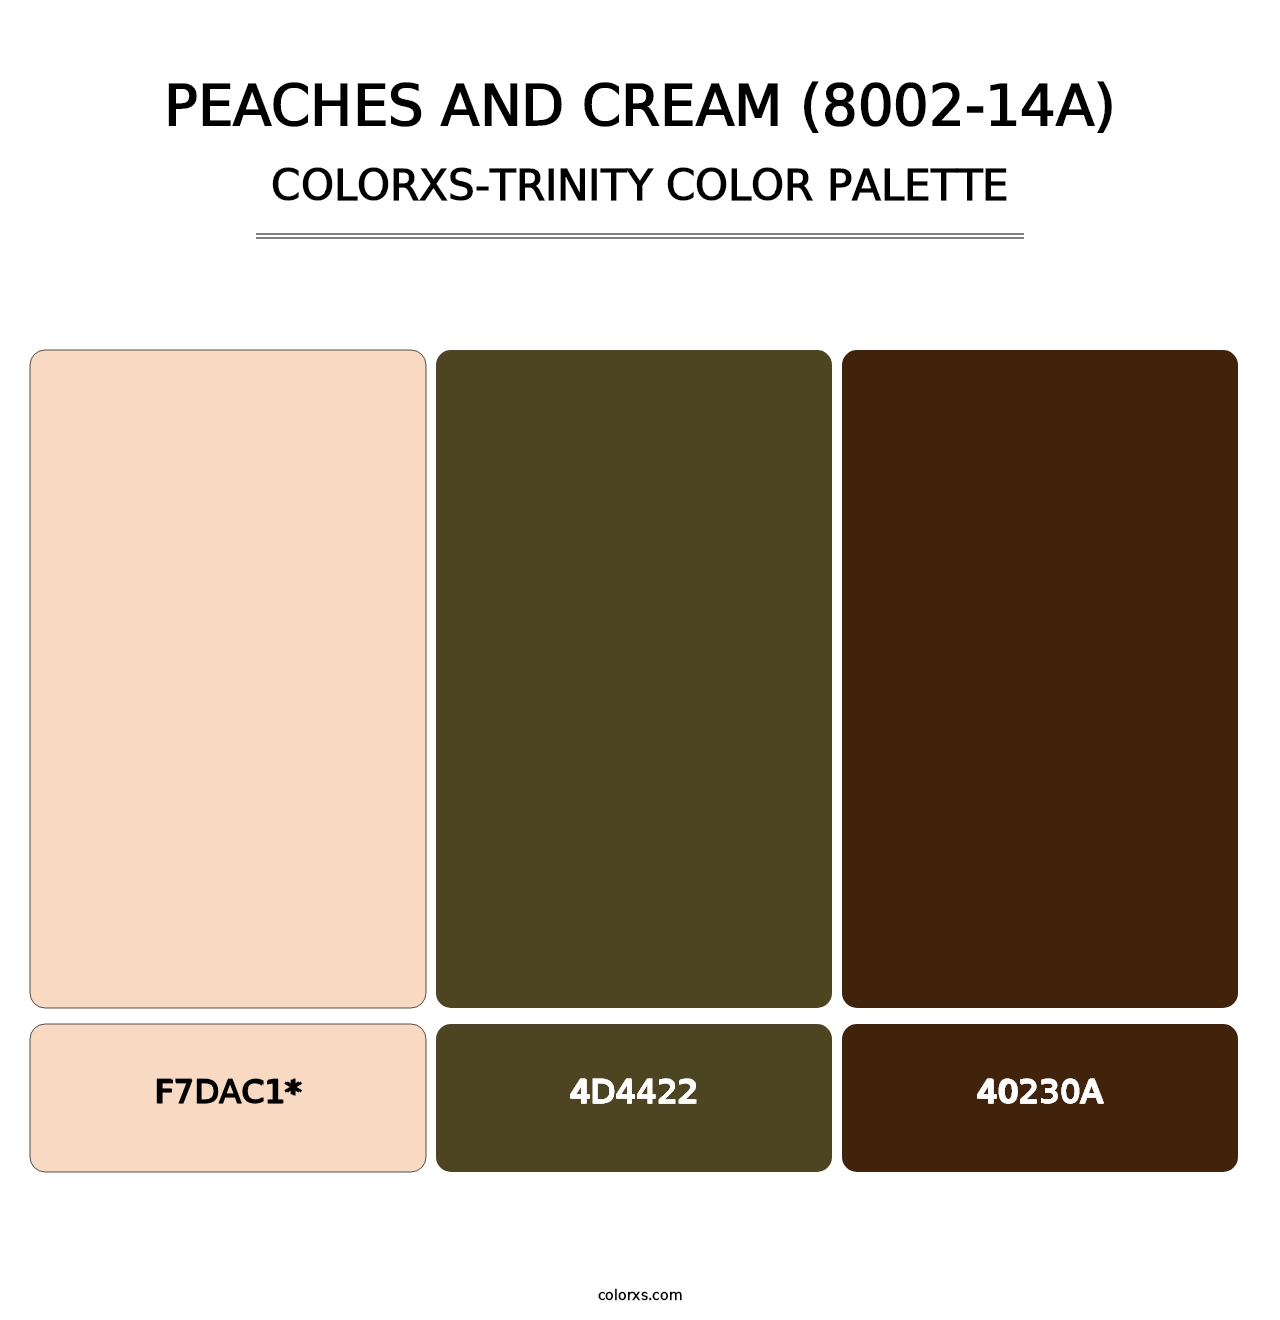 Peaches and Cream (8002-14A) - Colorxs Trinity Palette